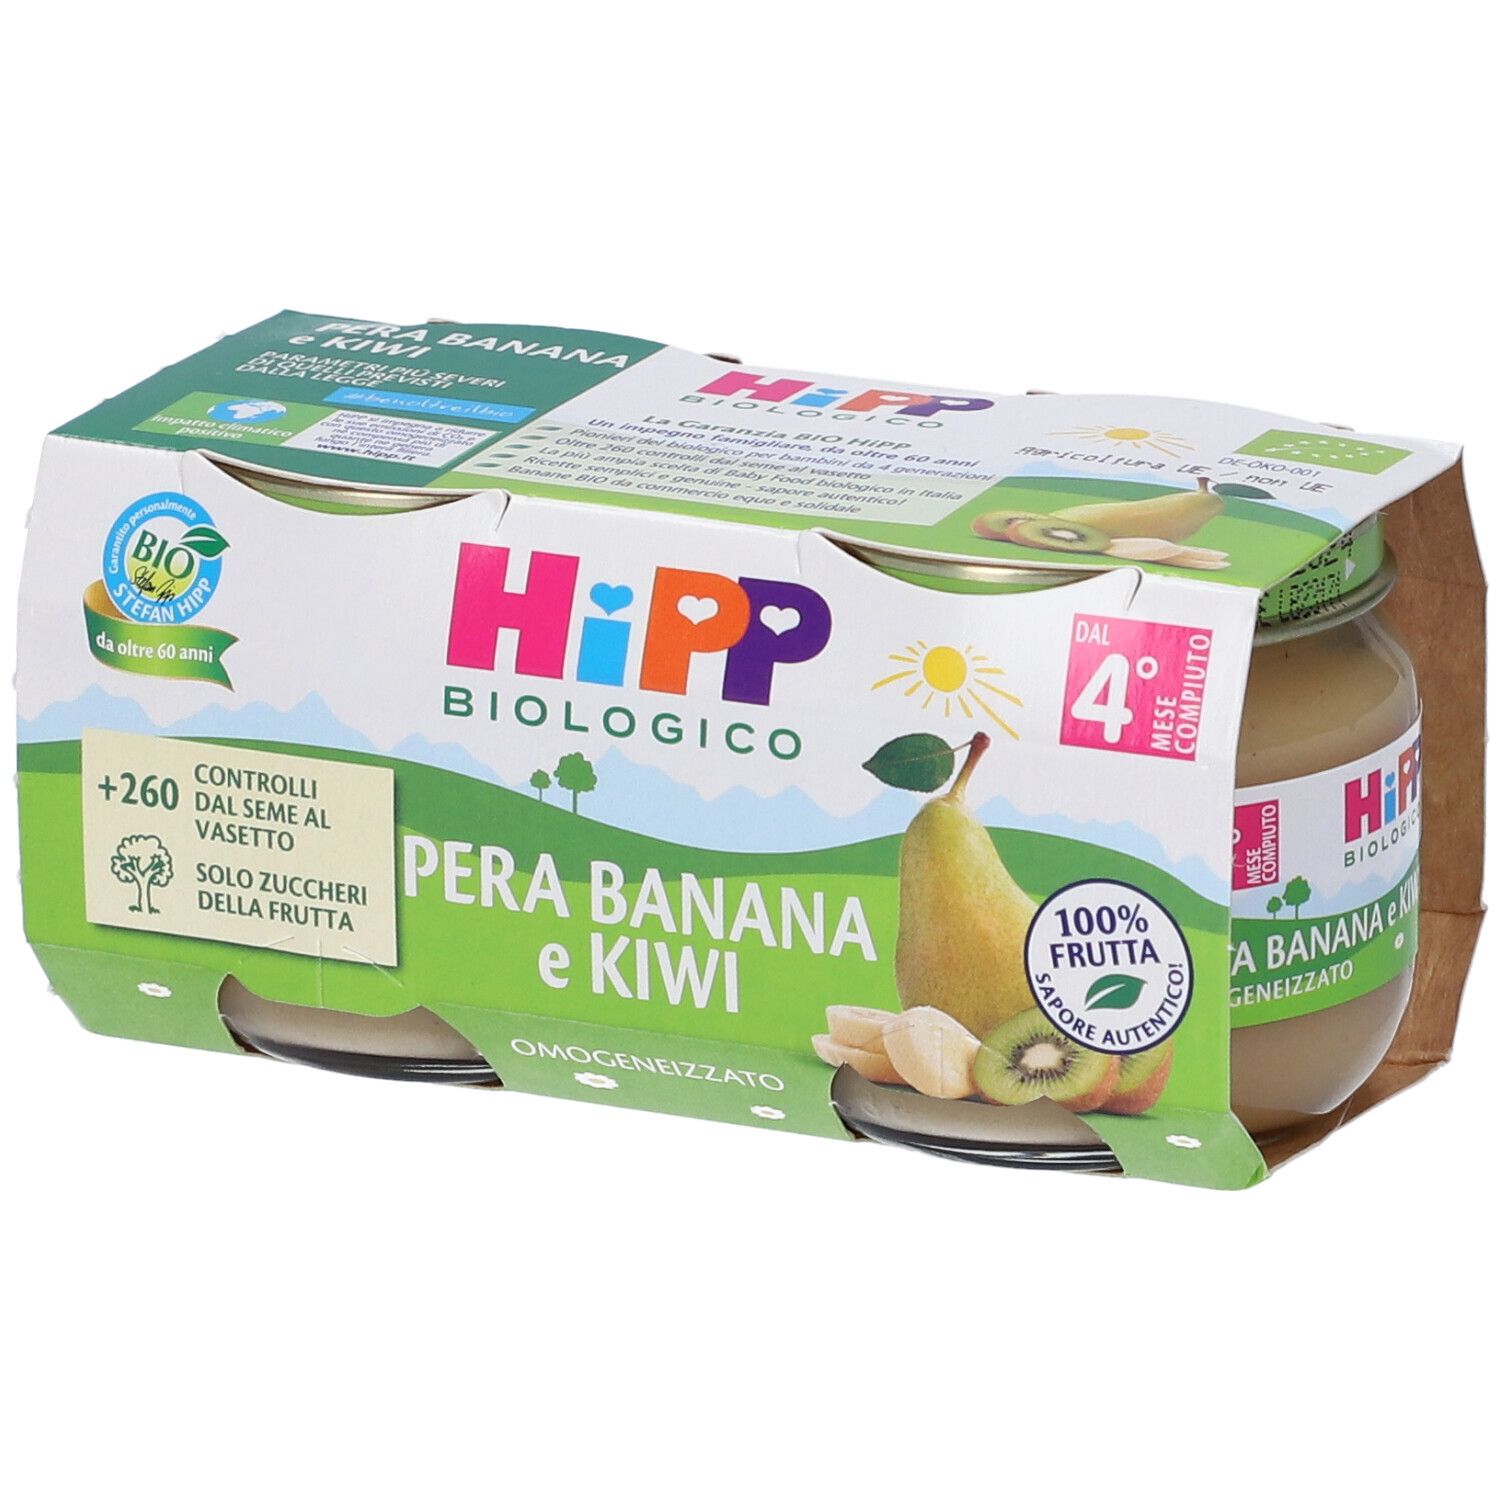 Image of HiPP Biologico Pera Banana e Kiwi